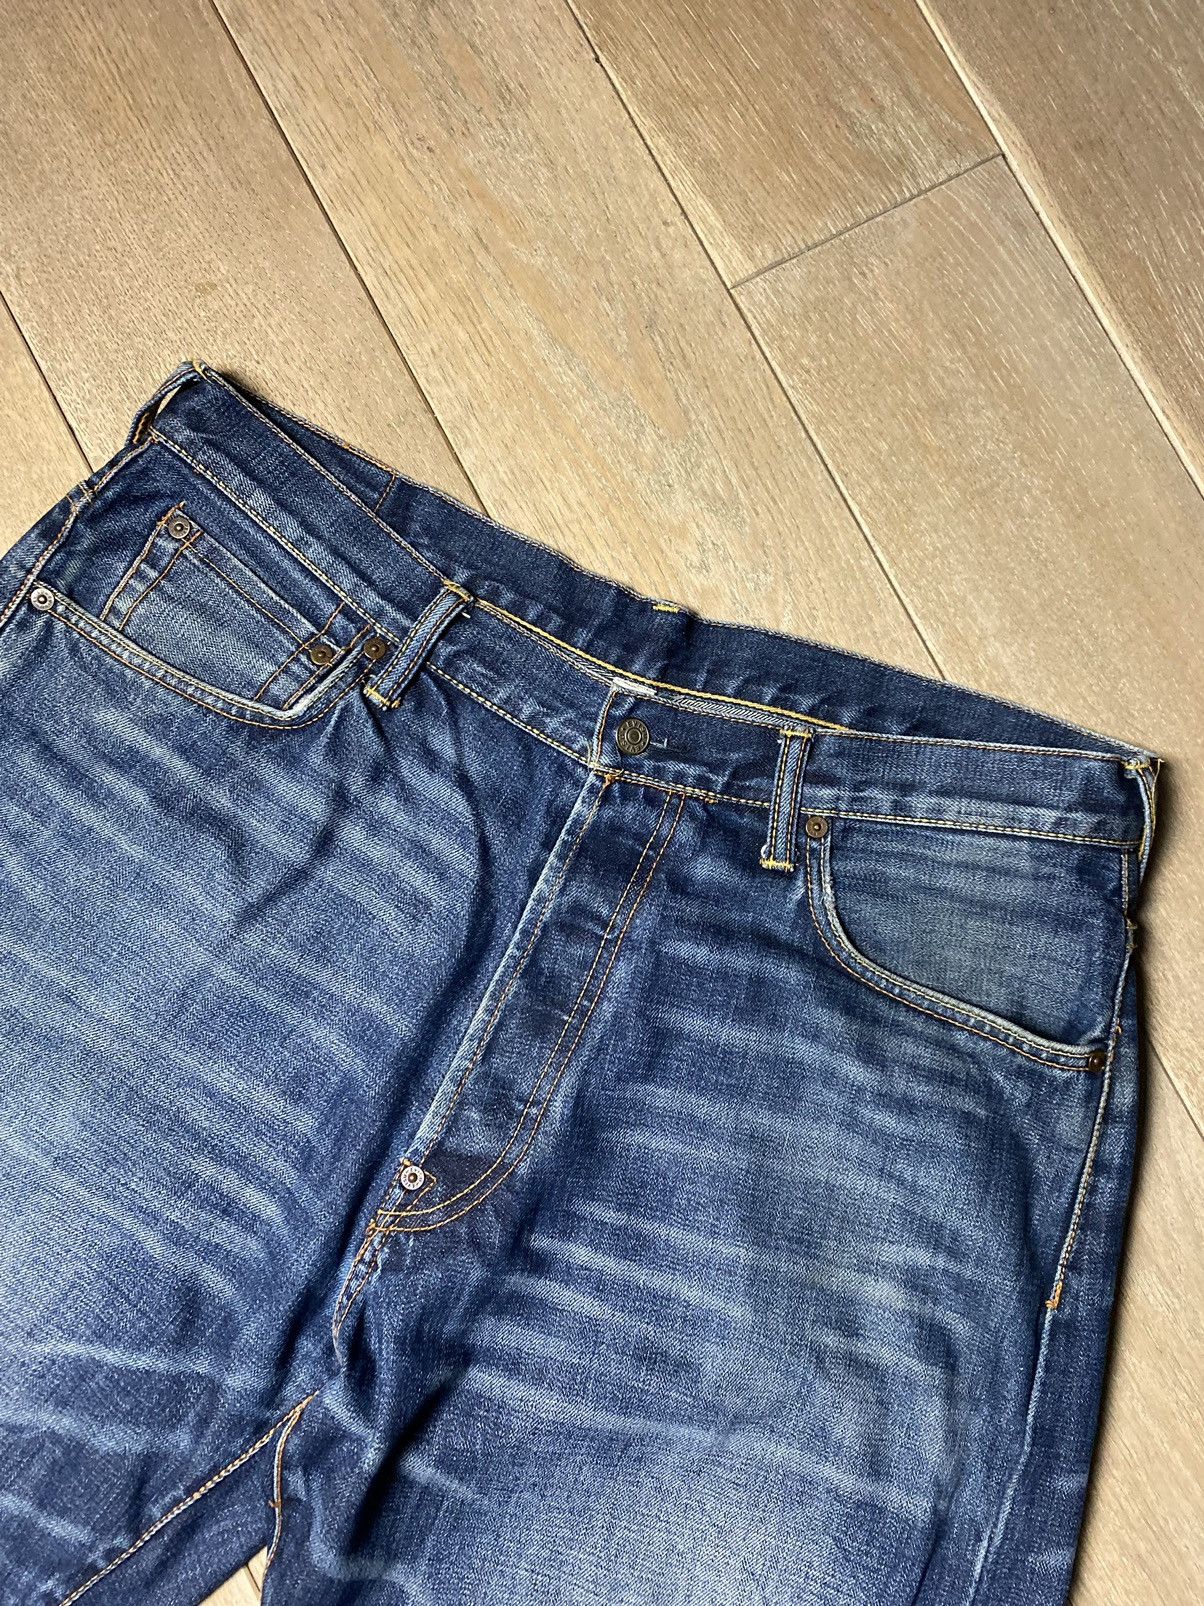 Vintage Evisu Japan vintage blue jeans denim pants big seagull logo Size US 38 / EU 54 - 10 Thumbnail